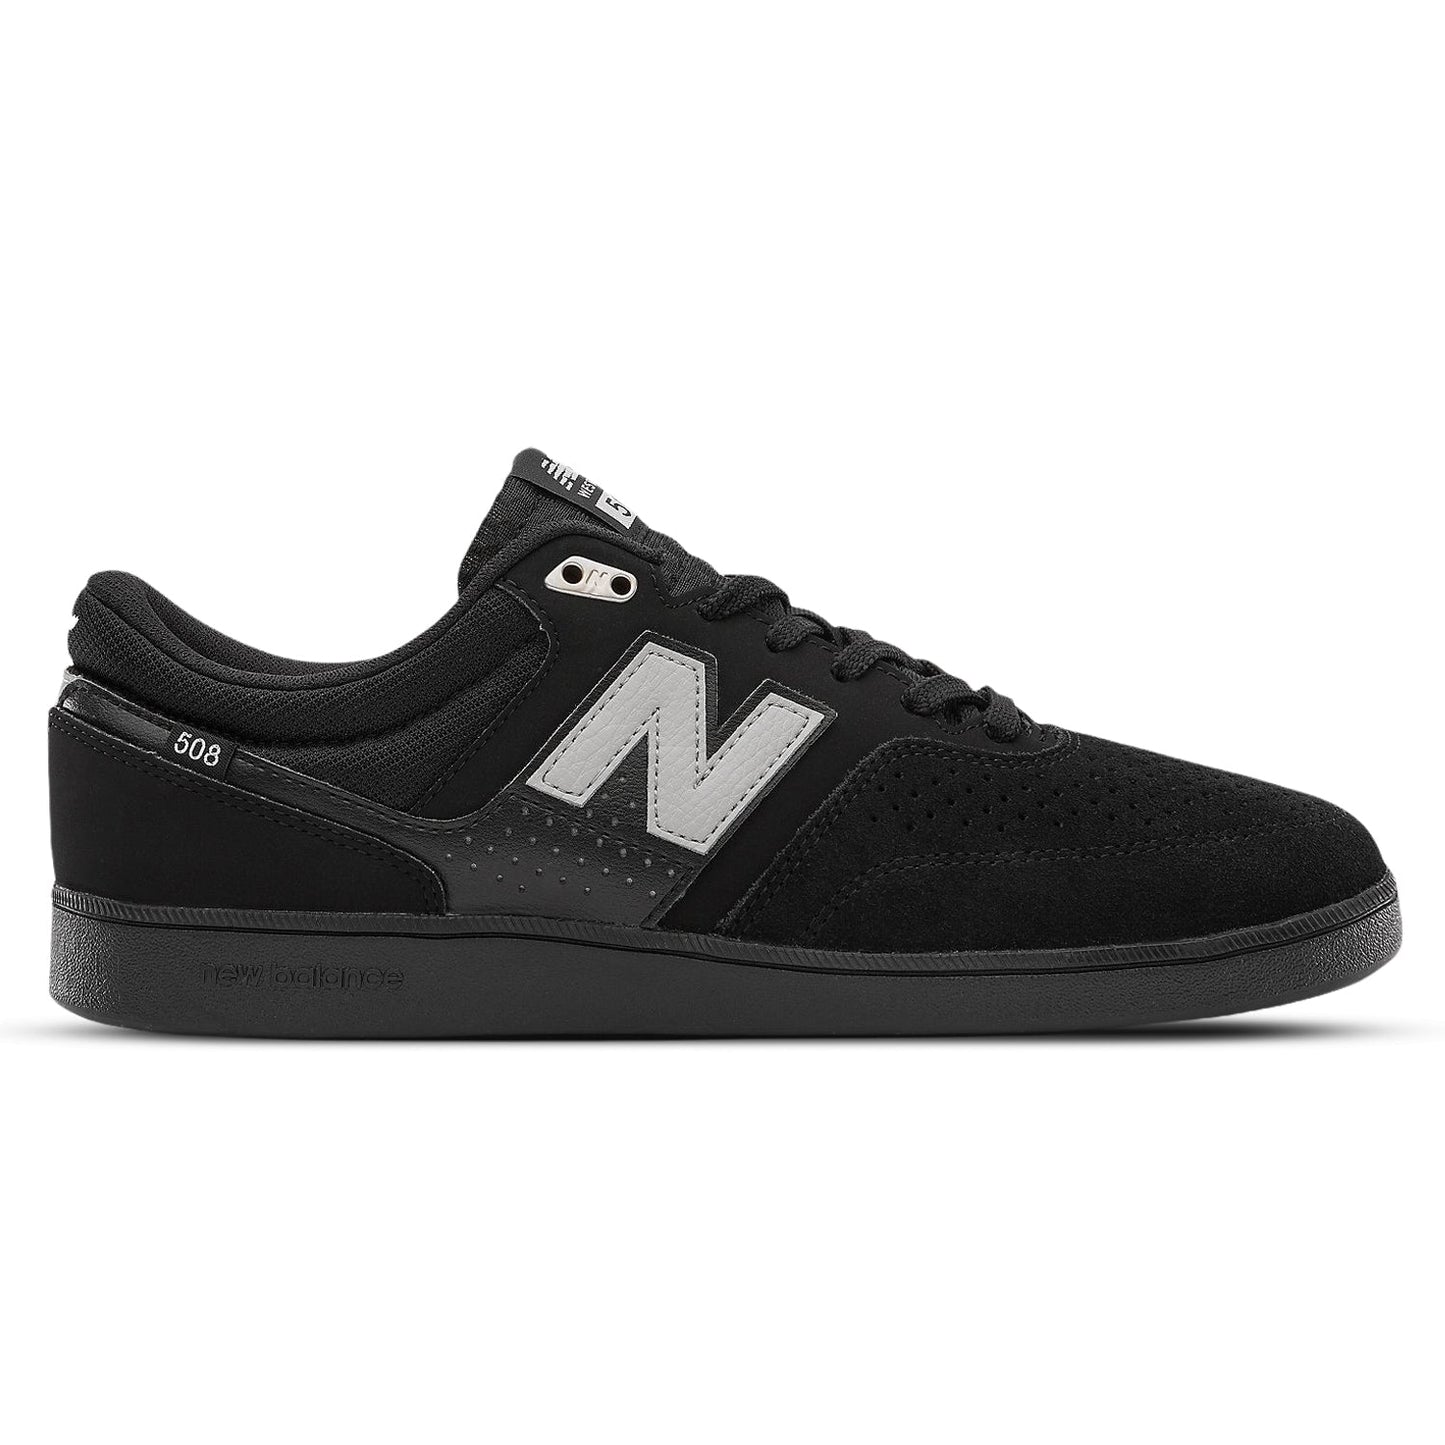 New Balance Numeric 508 Westgate Shoes Black / Black